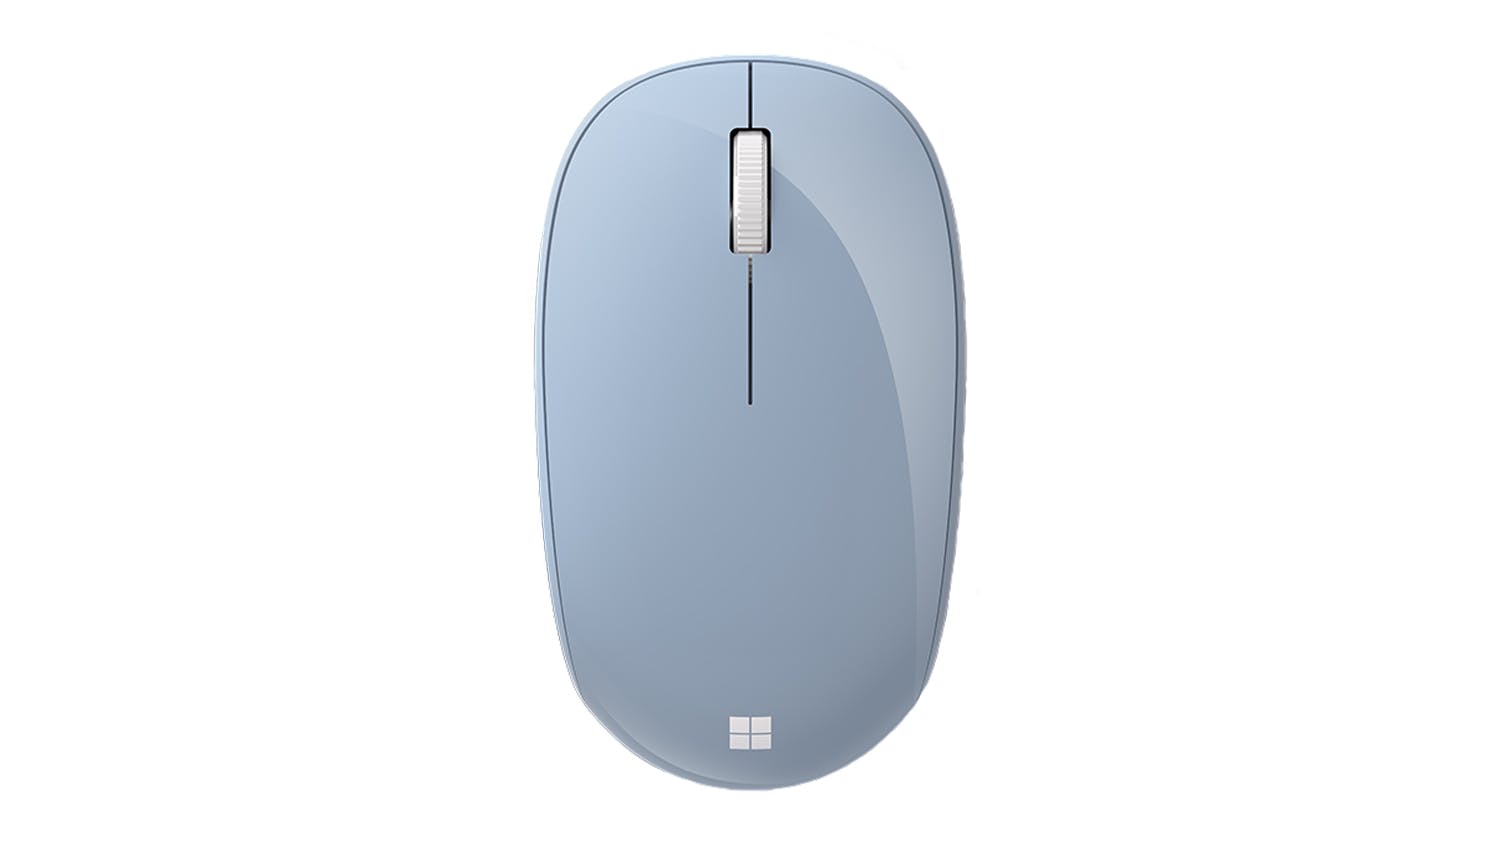 Beschrijving applaus Prestatie Microsoft Wireless Bluetooth Mouse - Pastel Blue | Harvey Norman New Zealand